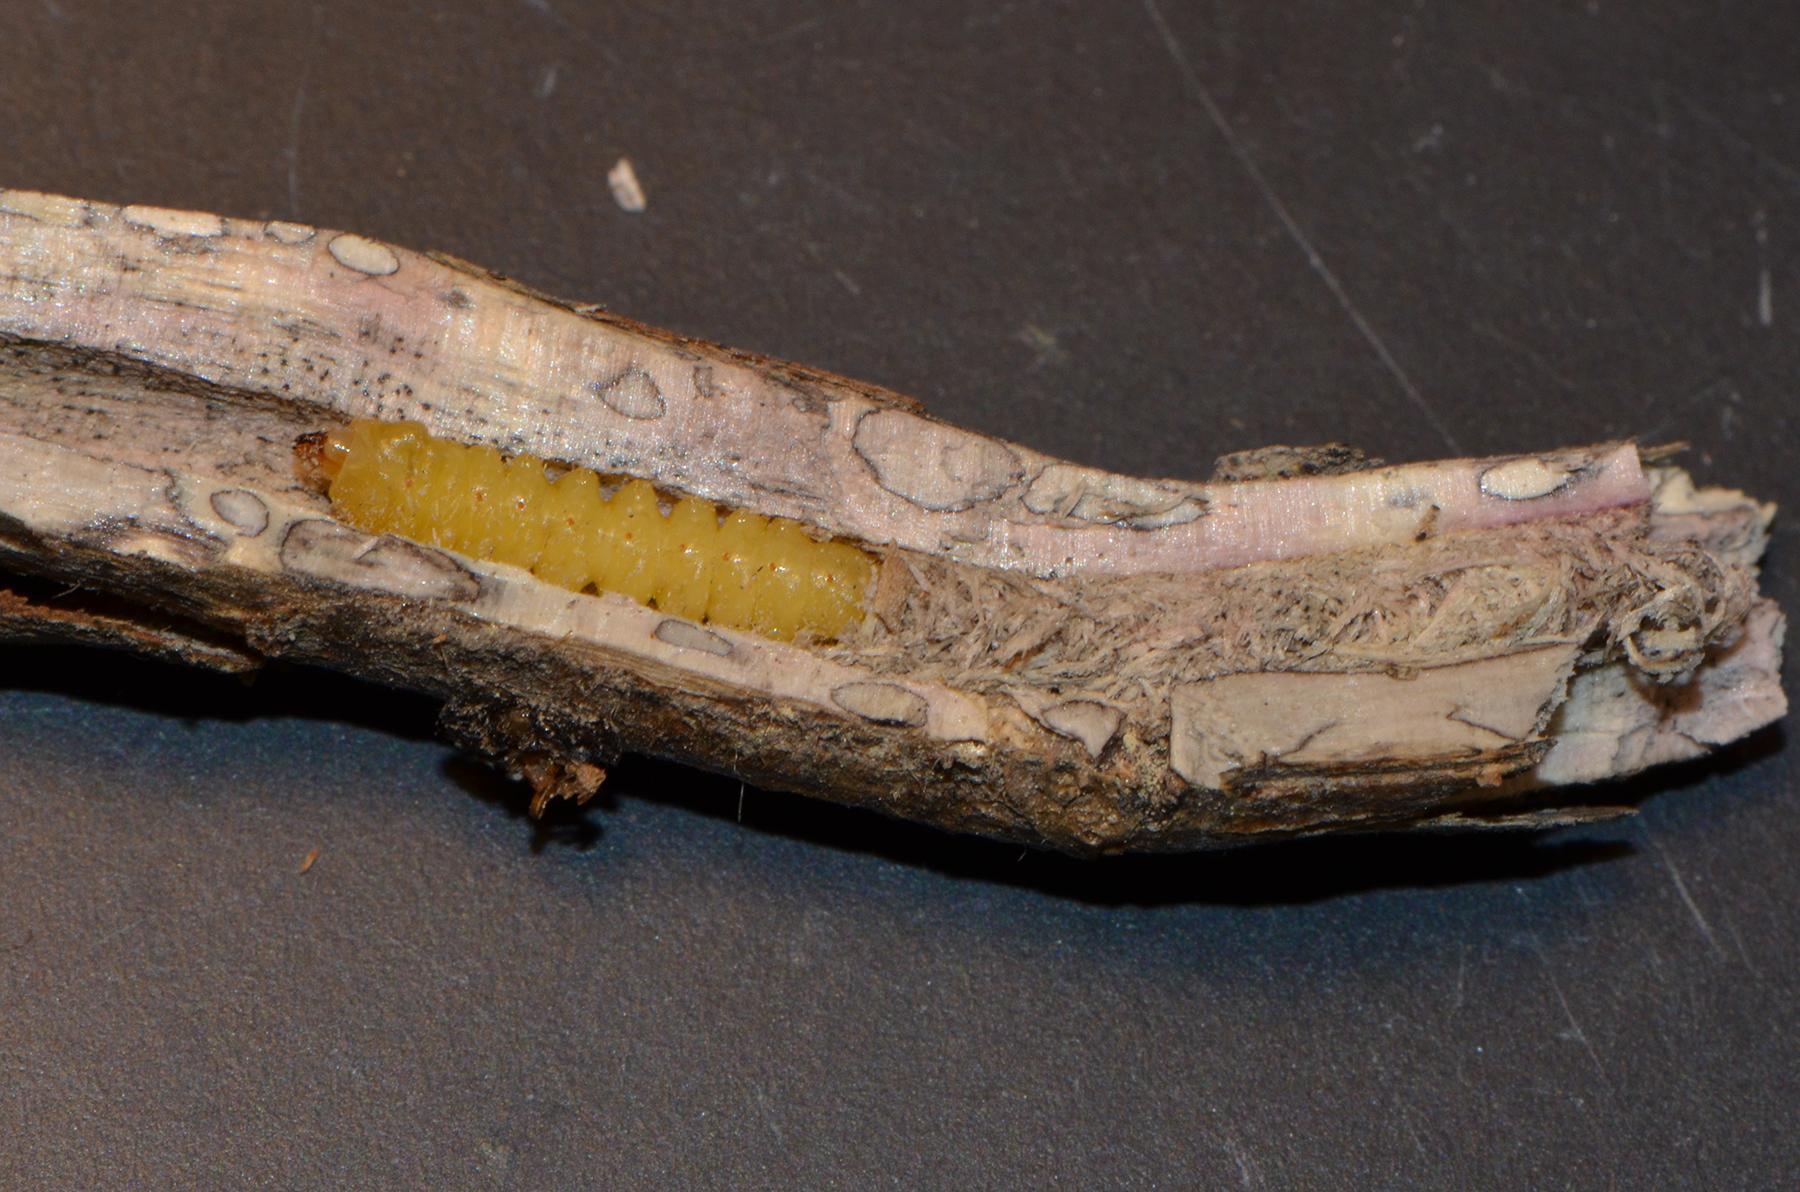 Figure 2. Soybean crop stubble that has been split open, revealing the Dectes stem borer larva within Photo: Alan Leslie